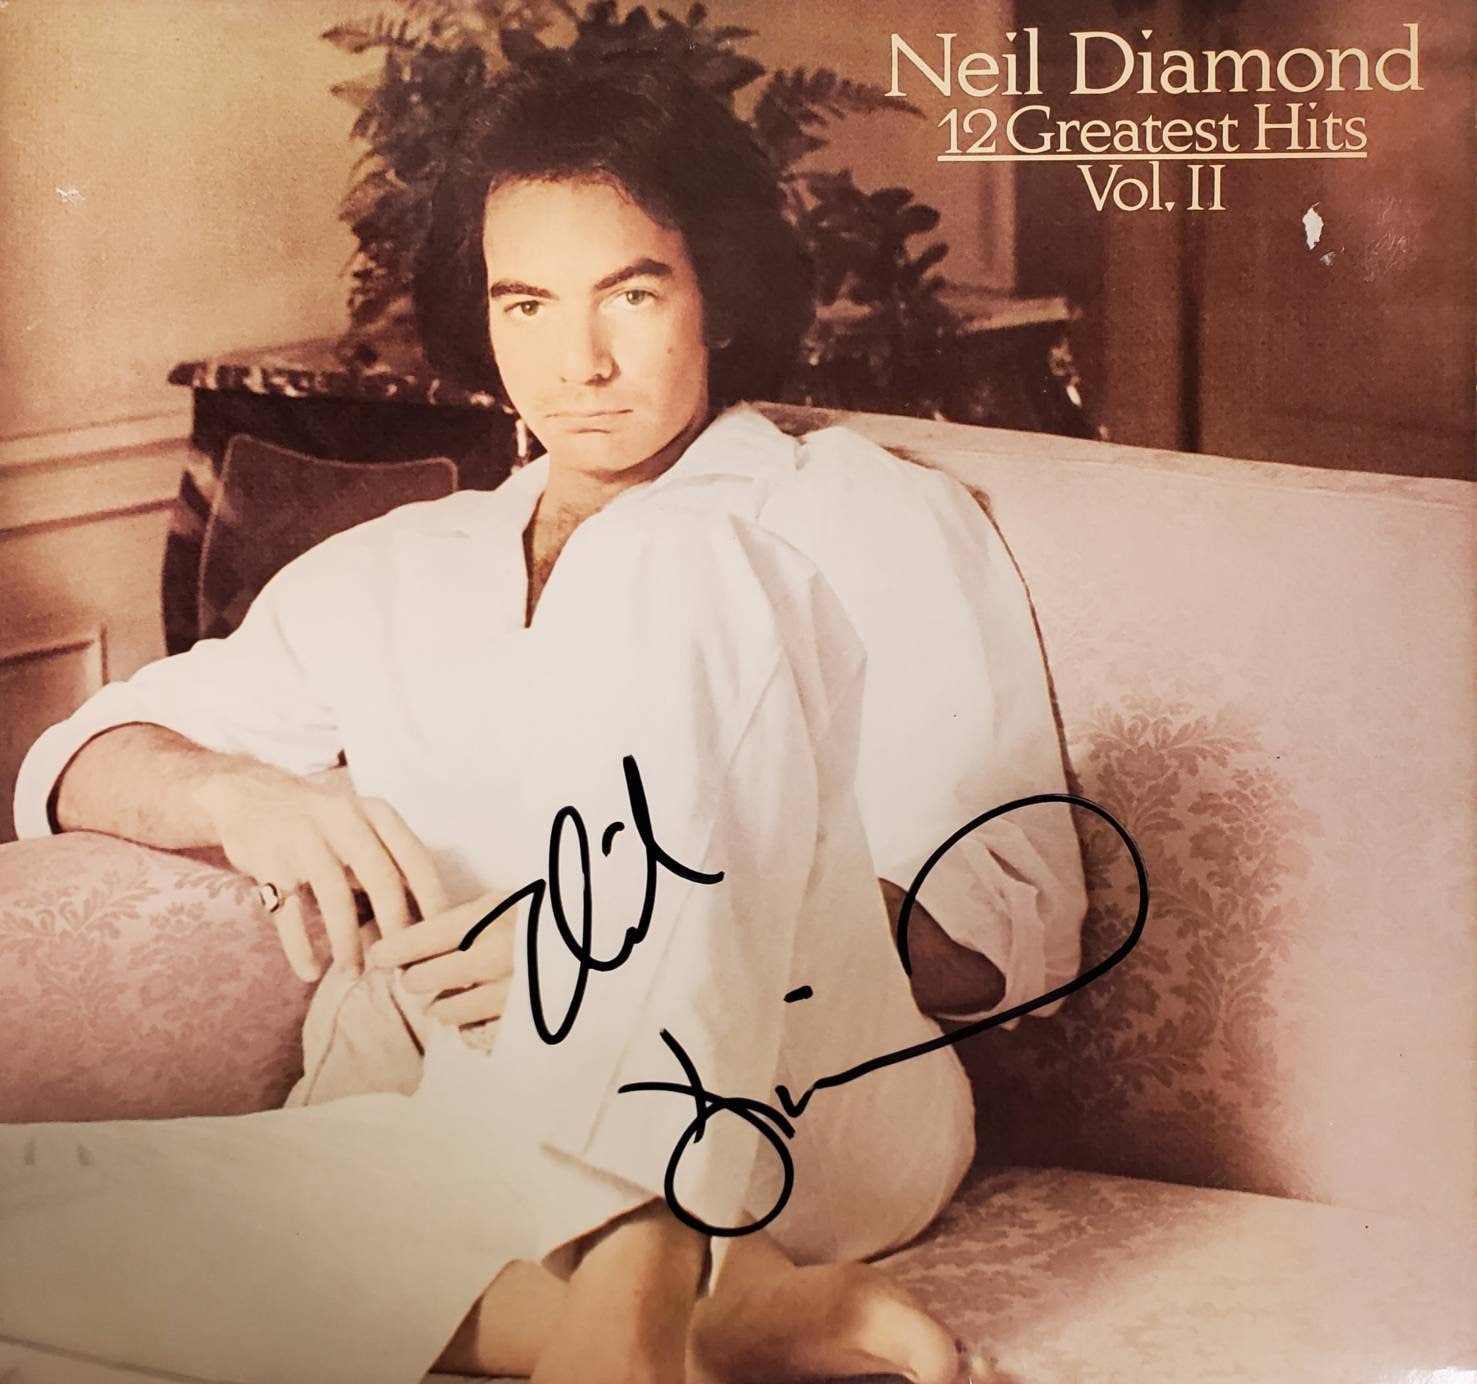 Neil Diamond 12 Greatest Hits Vol 2 LP Record Album Hand Signed Autograph by Neil Diamond wLOA